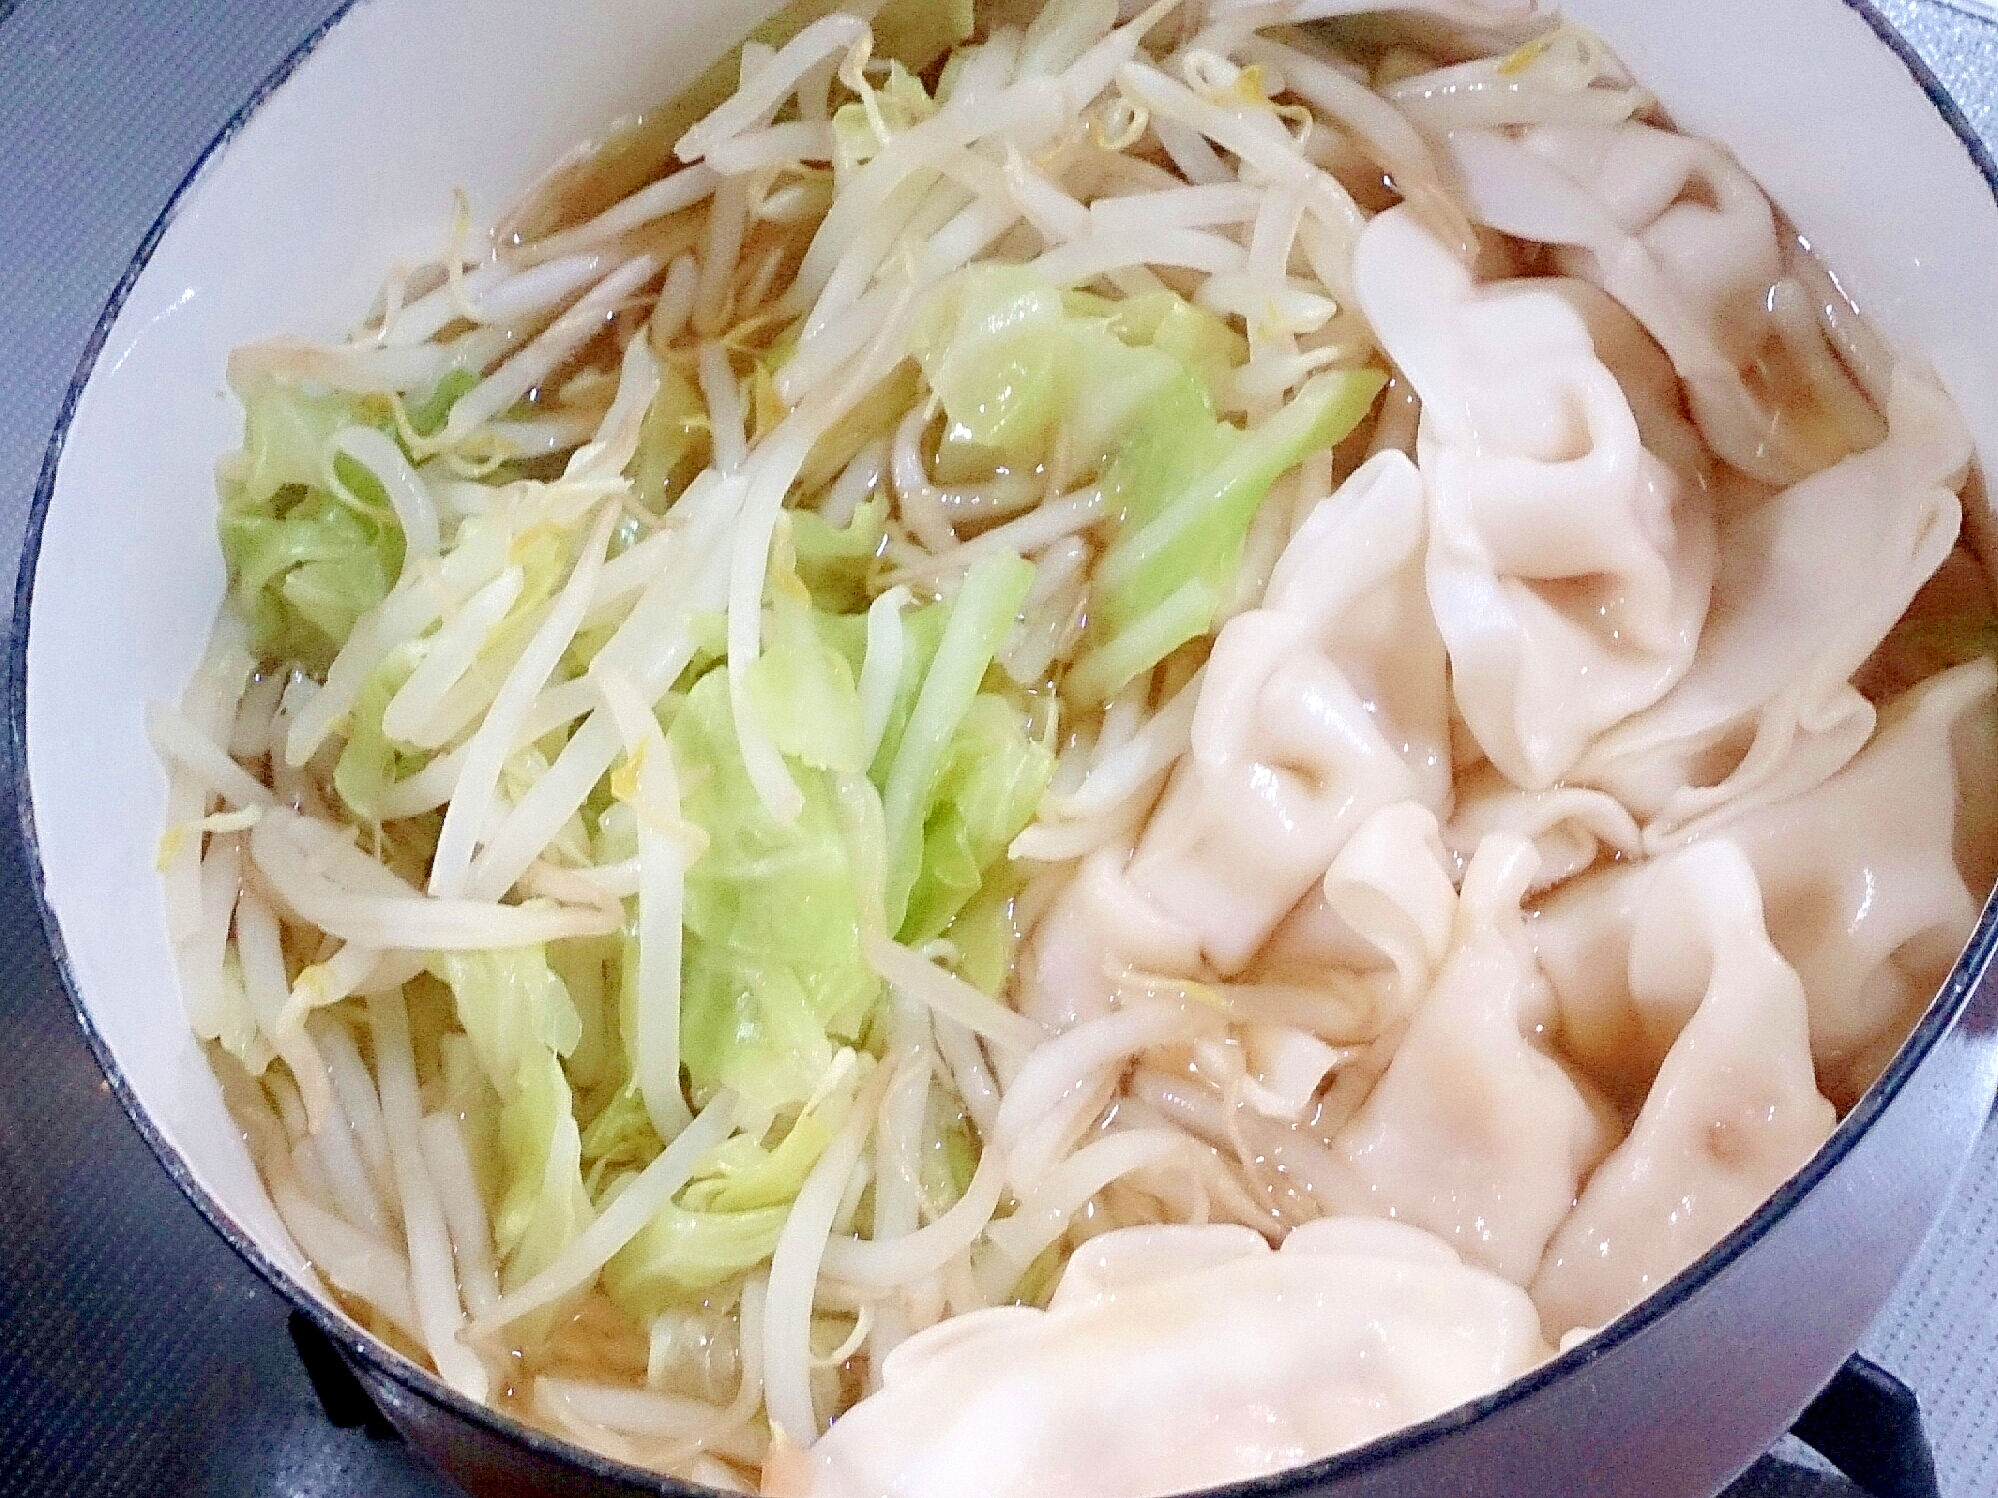 中華風醤油スープ餃子